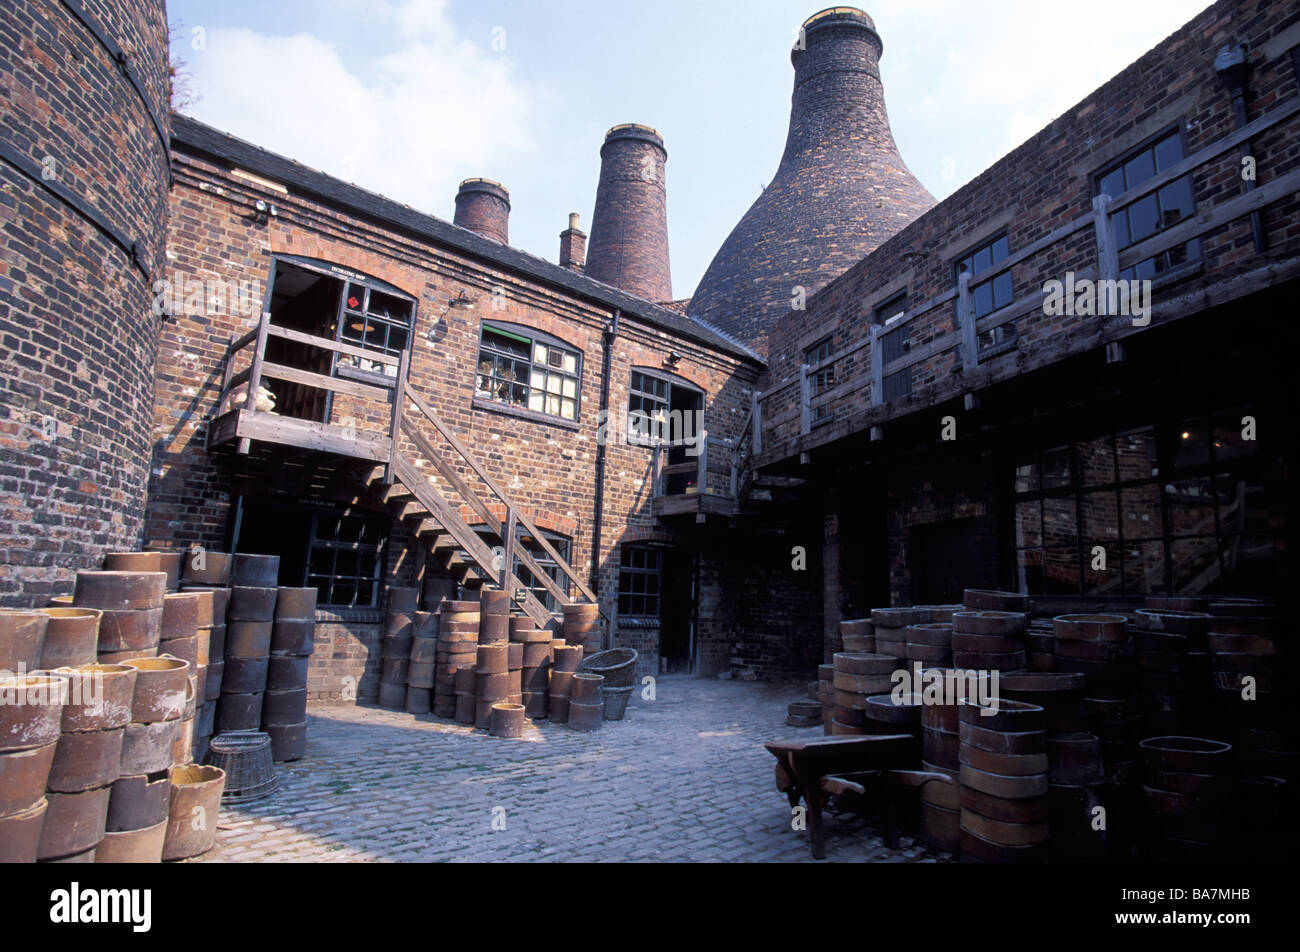 Pottery Mueum, Stoke on Trent, Staffordshire, England, United Kingdom Stock Photo